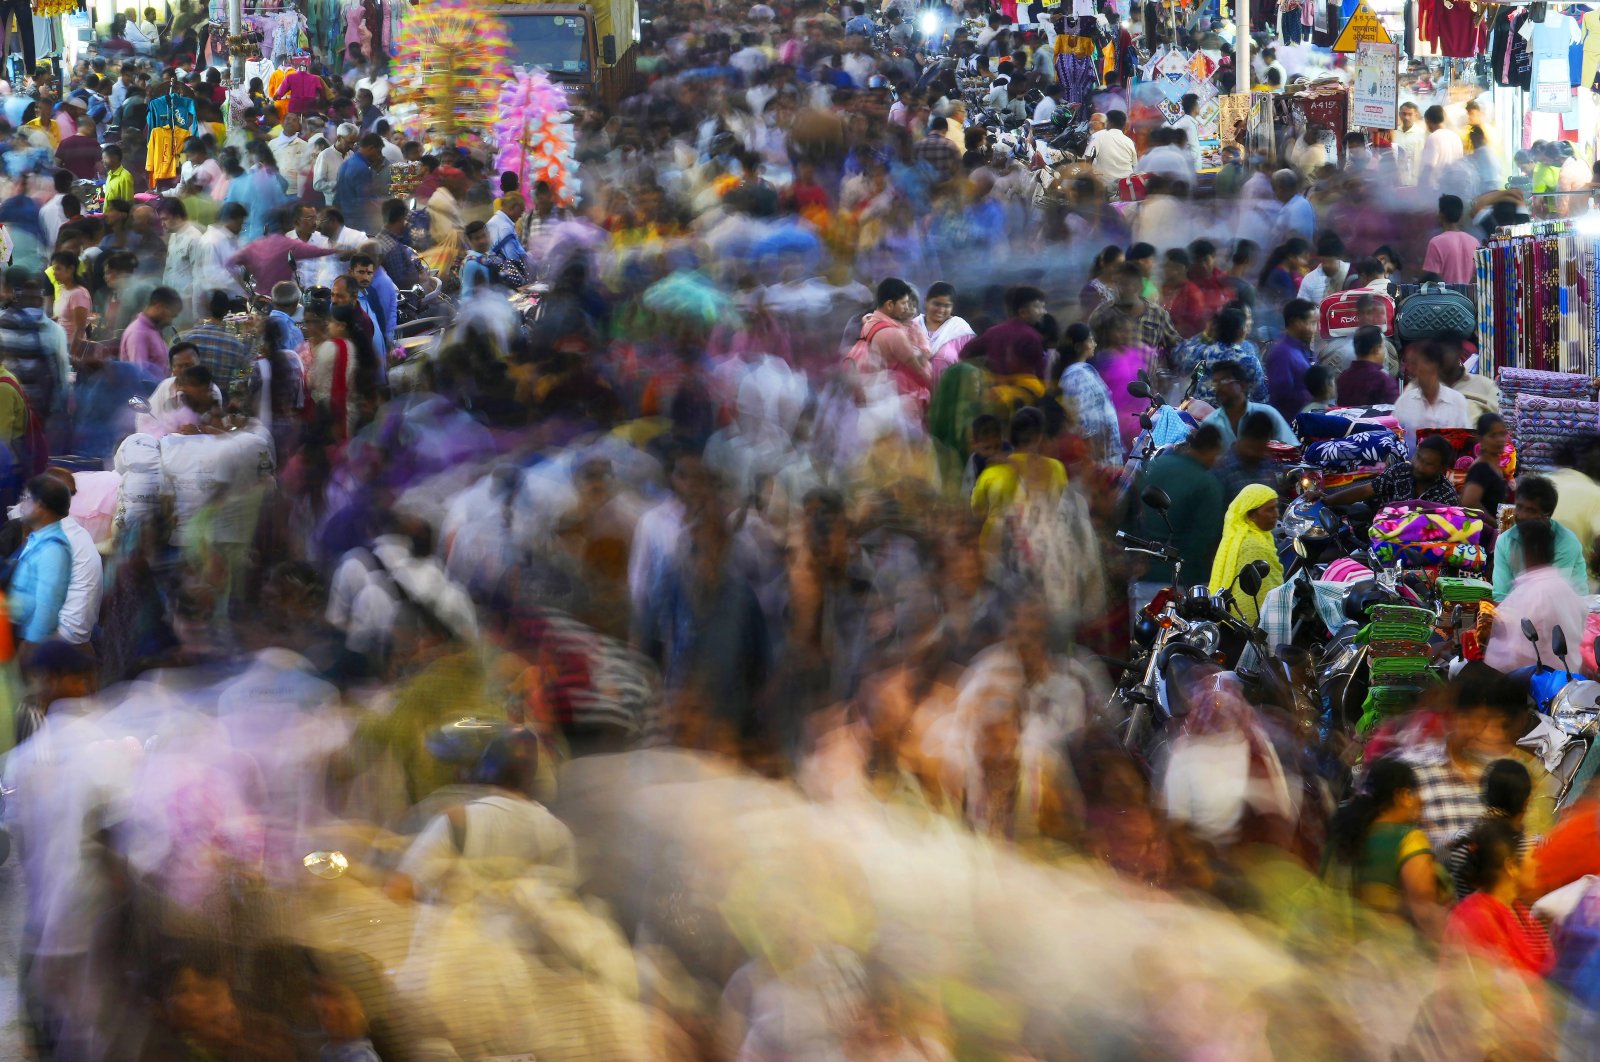 People move through a market in Mumbai, India, Nov. 12, 2022. (AP Photo)